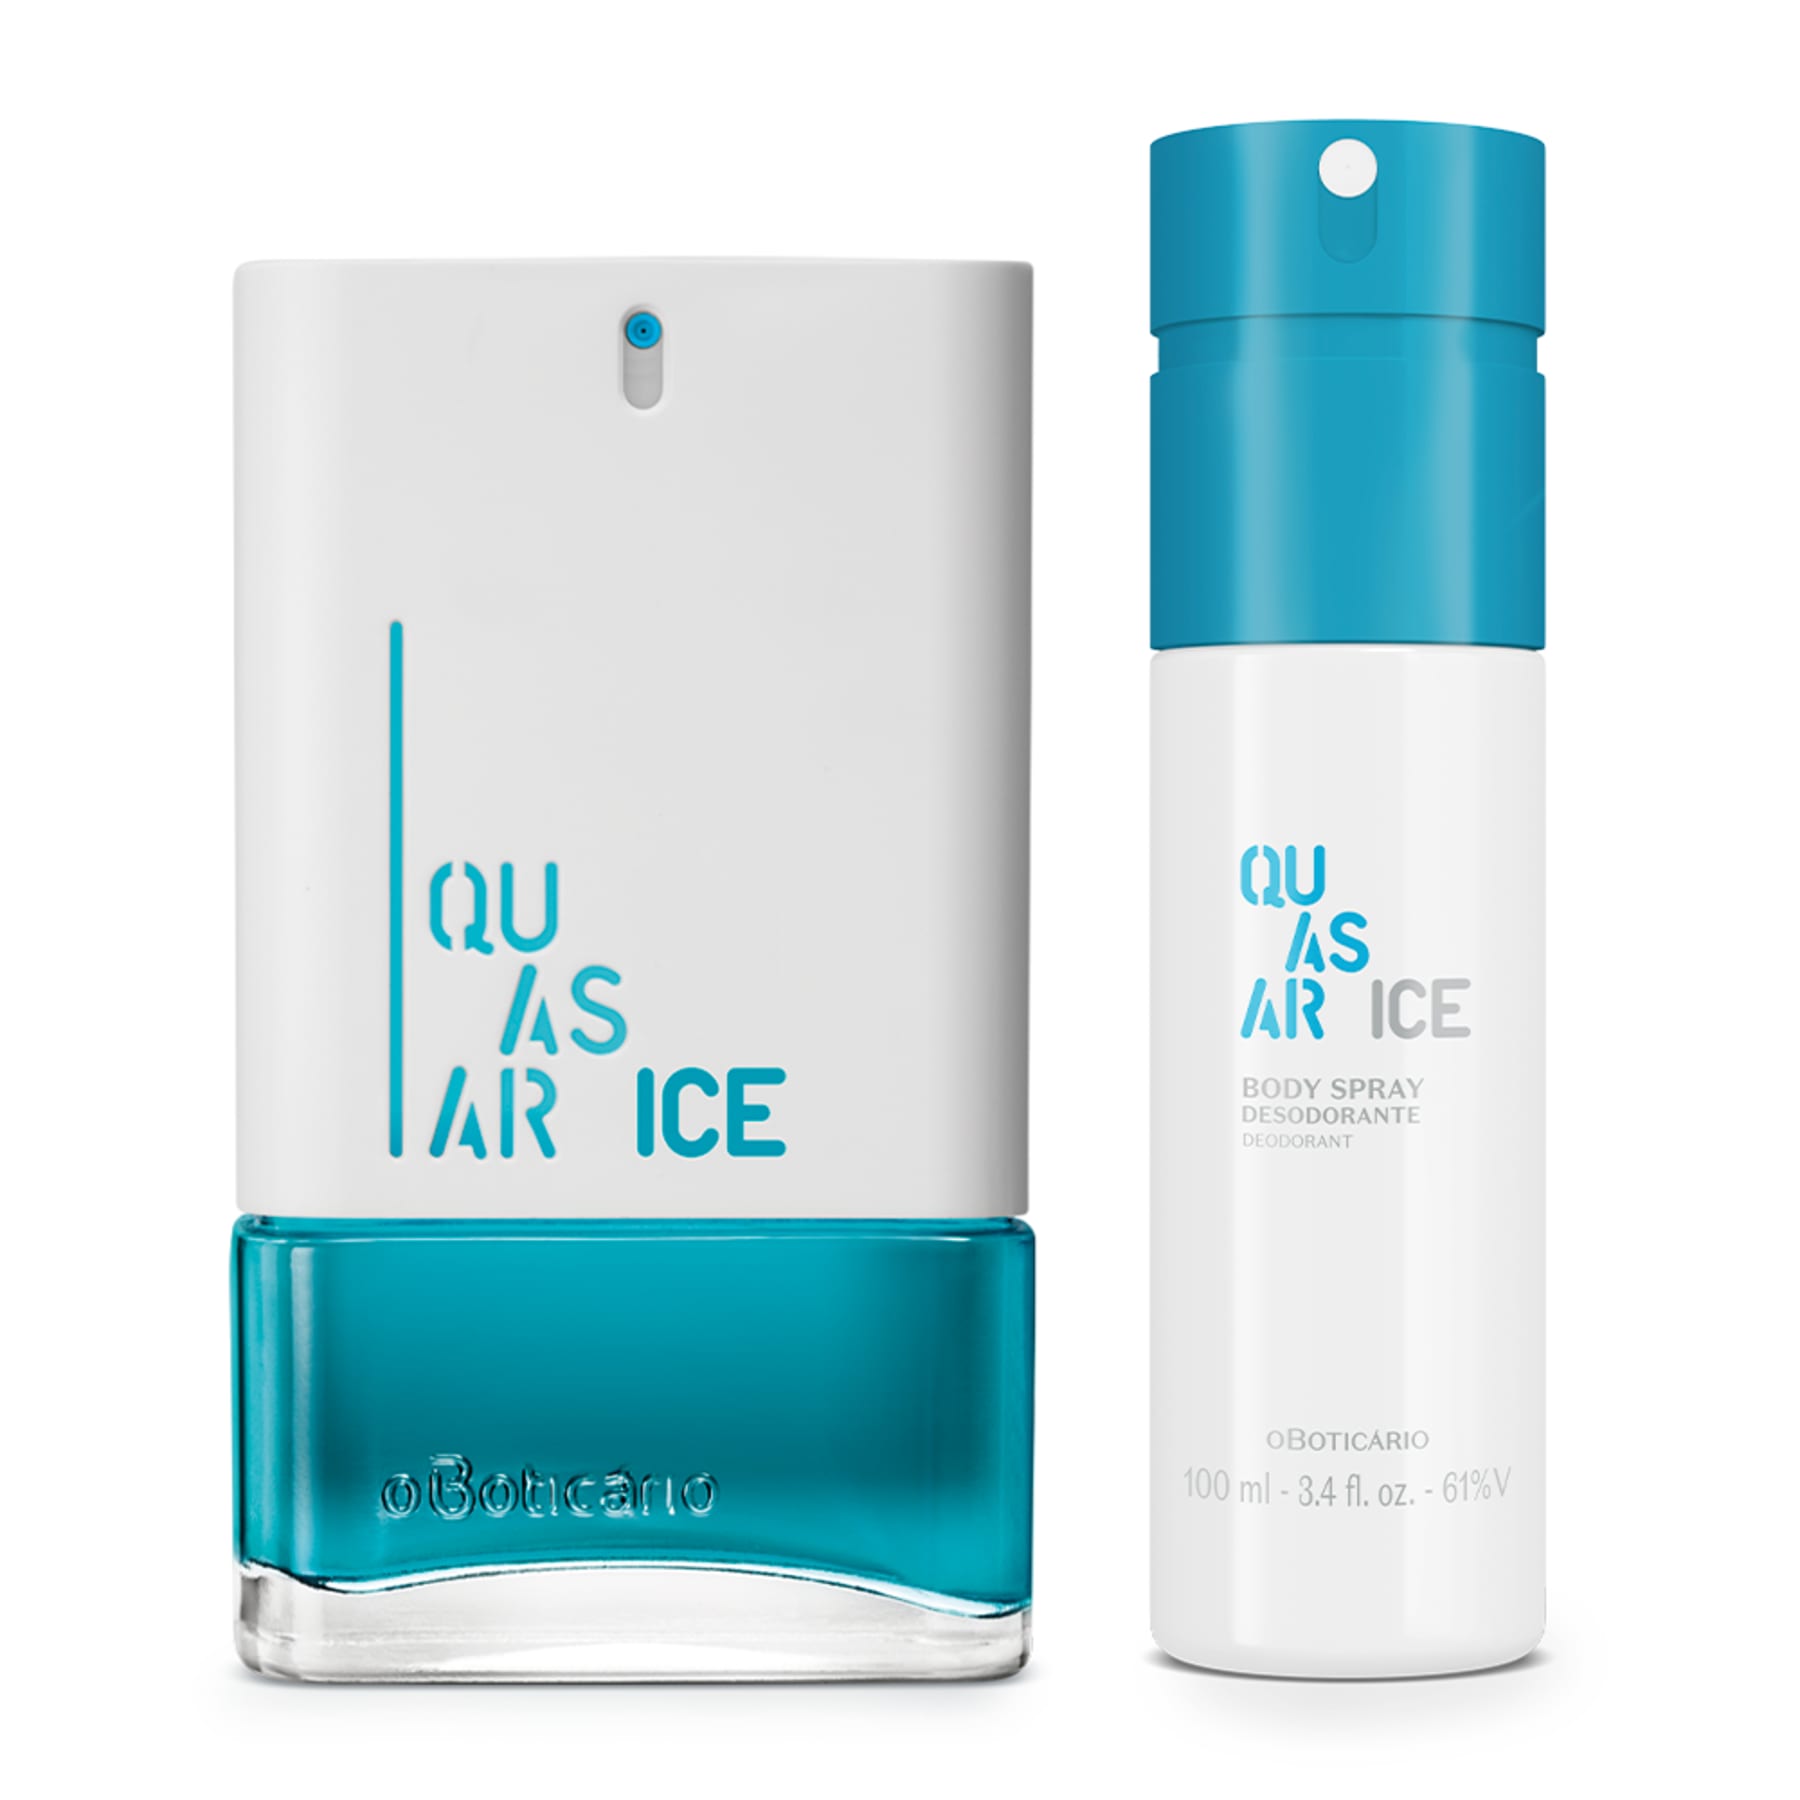 Kit Quasar Ice: Deodorant Cologne 100ml + Body Spray 100ml - o Boticario